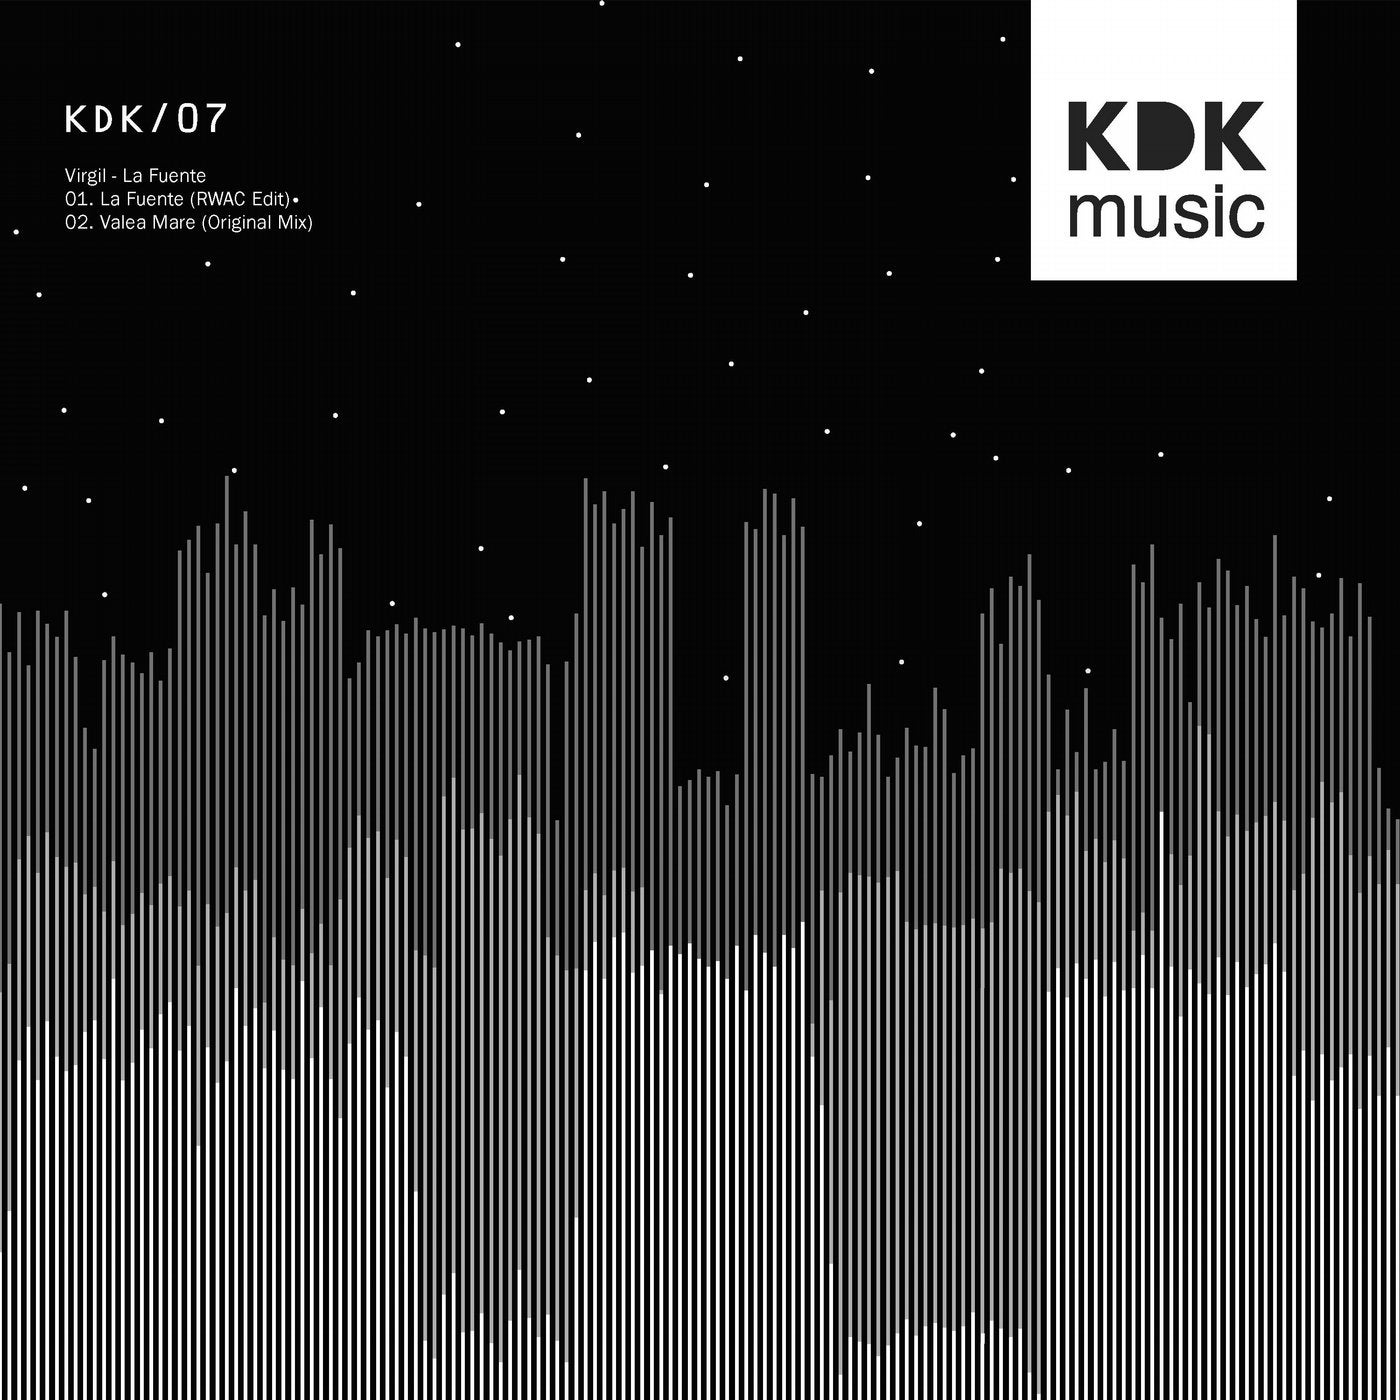 KDK Music artists & music download - Beatport